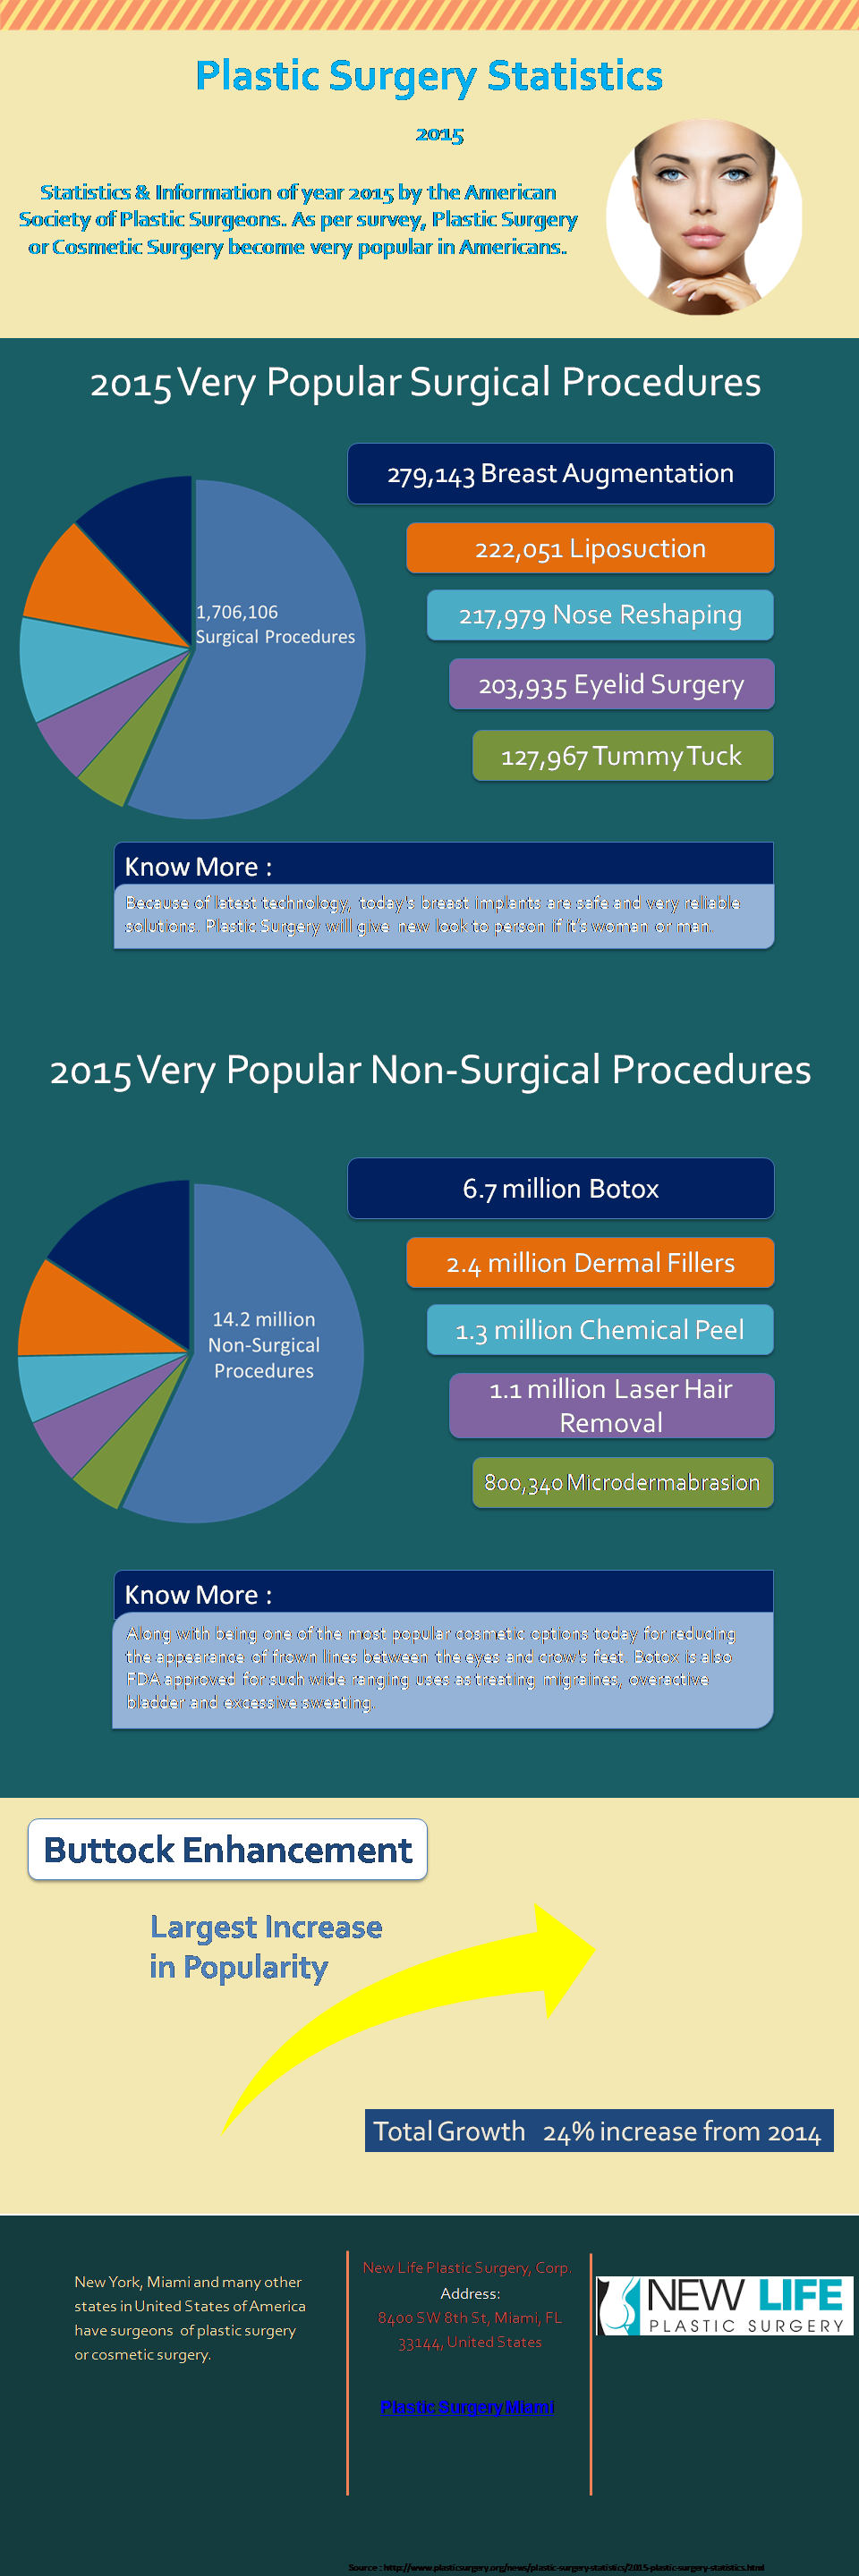 60+ Plastic Surgery Statistics, Facts & Demographics